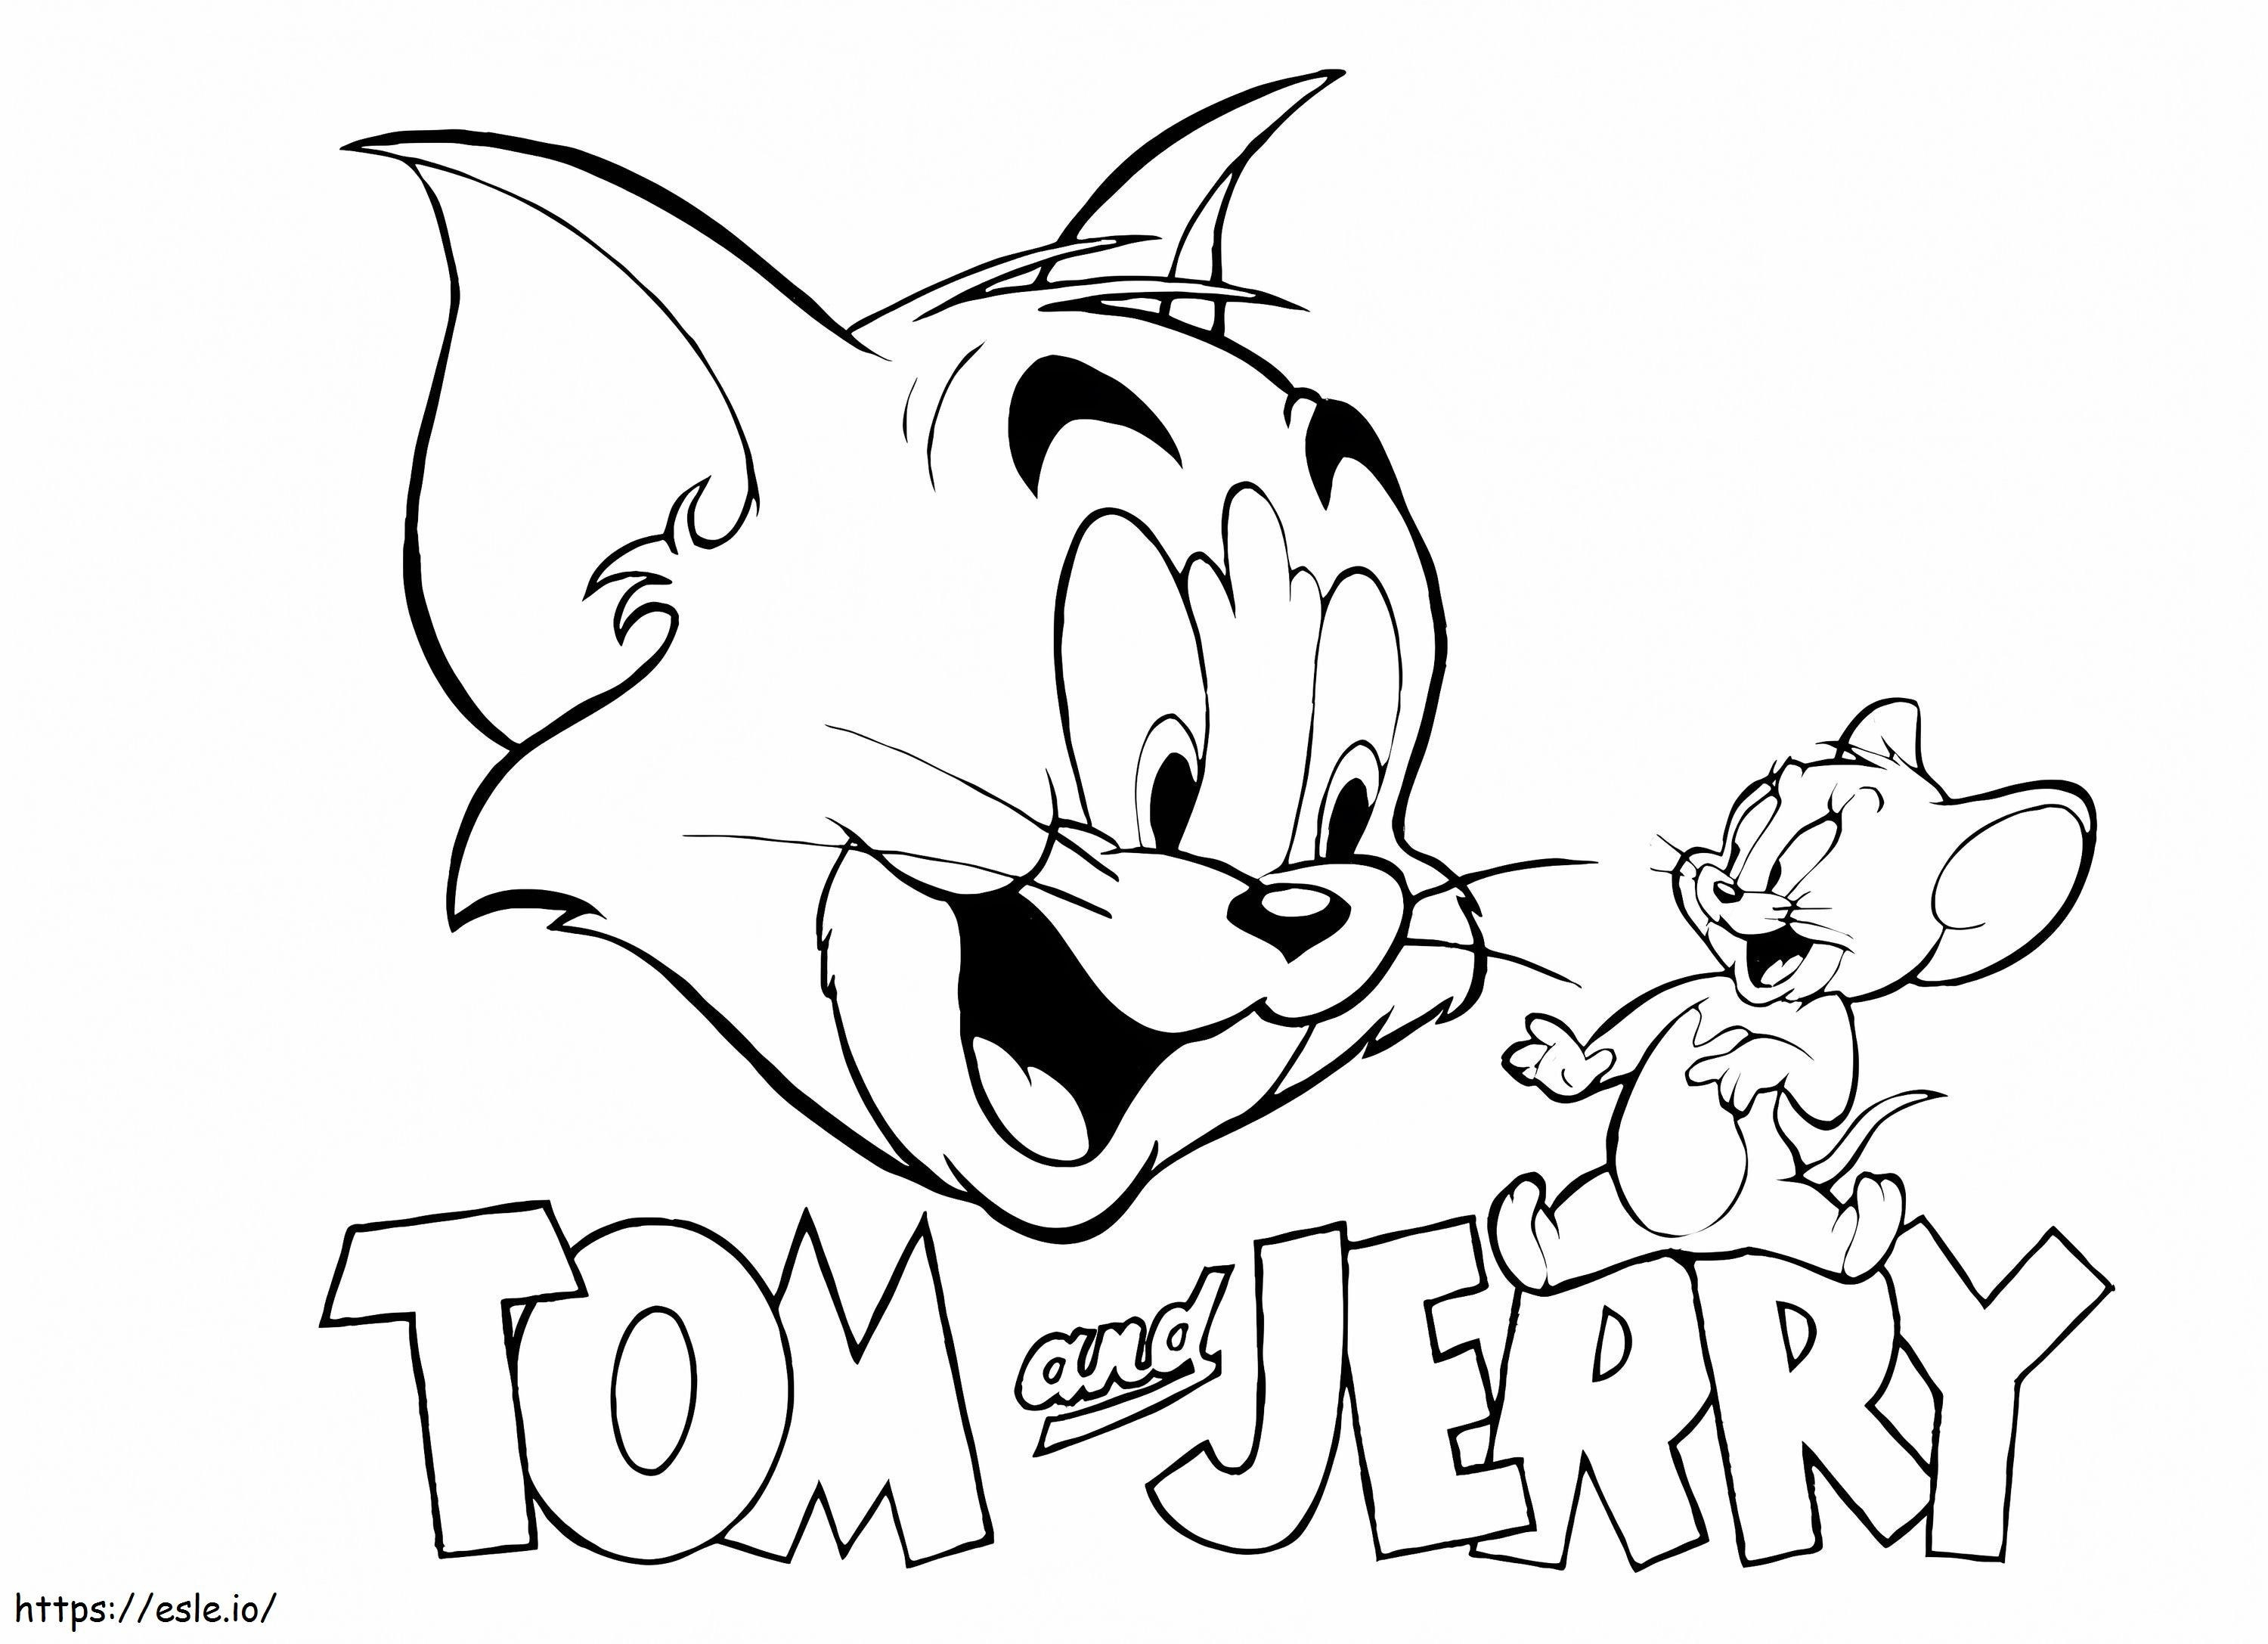  Tom en Jerry Mooie Tom en Jerry duim omhoog Tom en Jerry van Tom en Jerry kleurplaat kleurplaat